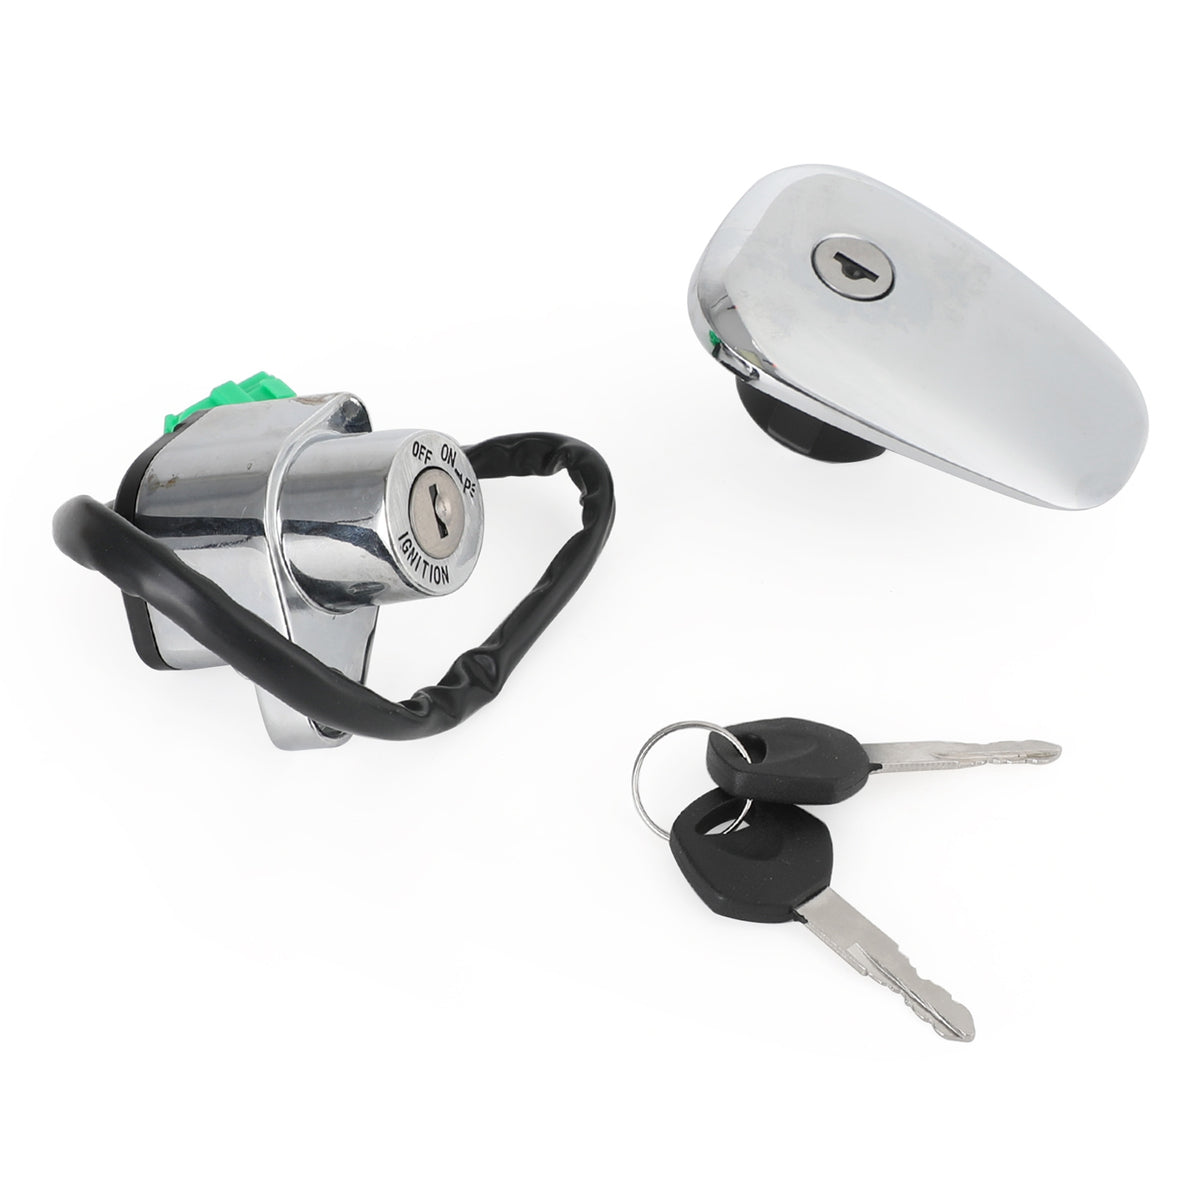 Fuel Gas Cap Ignition Switch Lock Set For Suzuki Intruder VS 700 750 800 1400 Generic